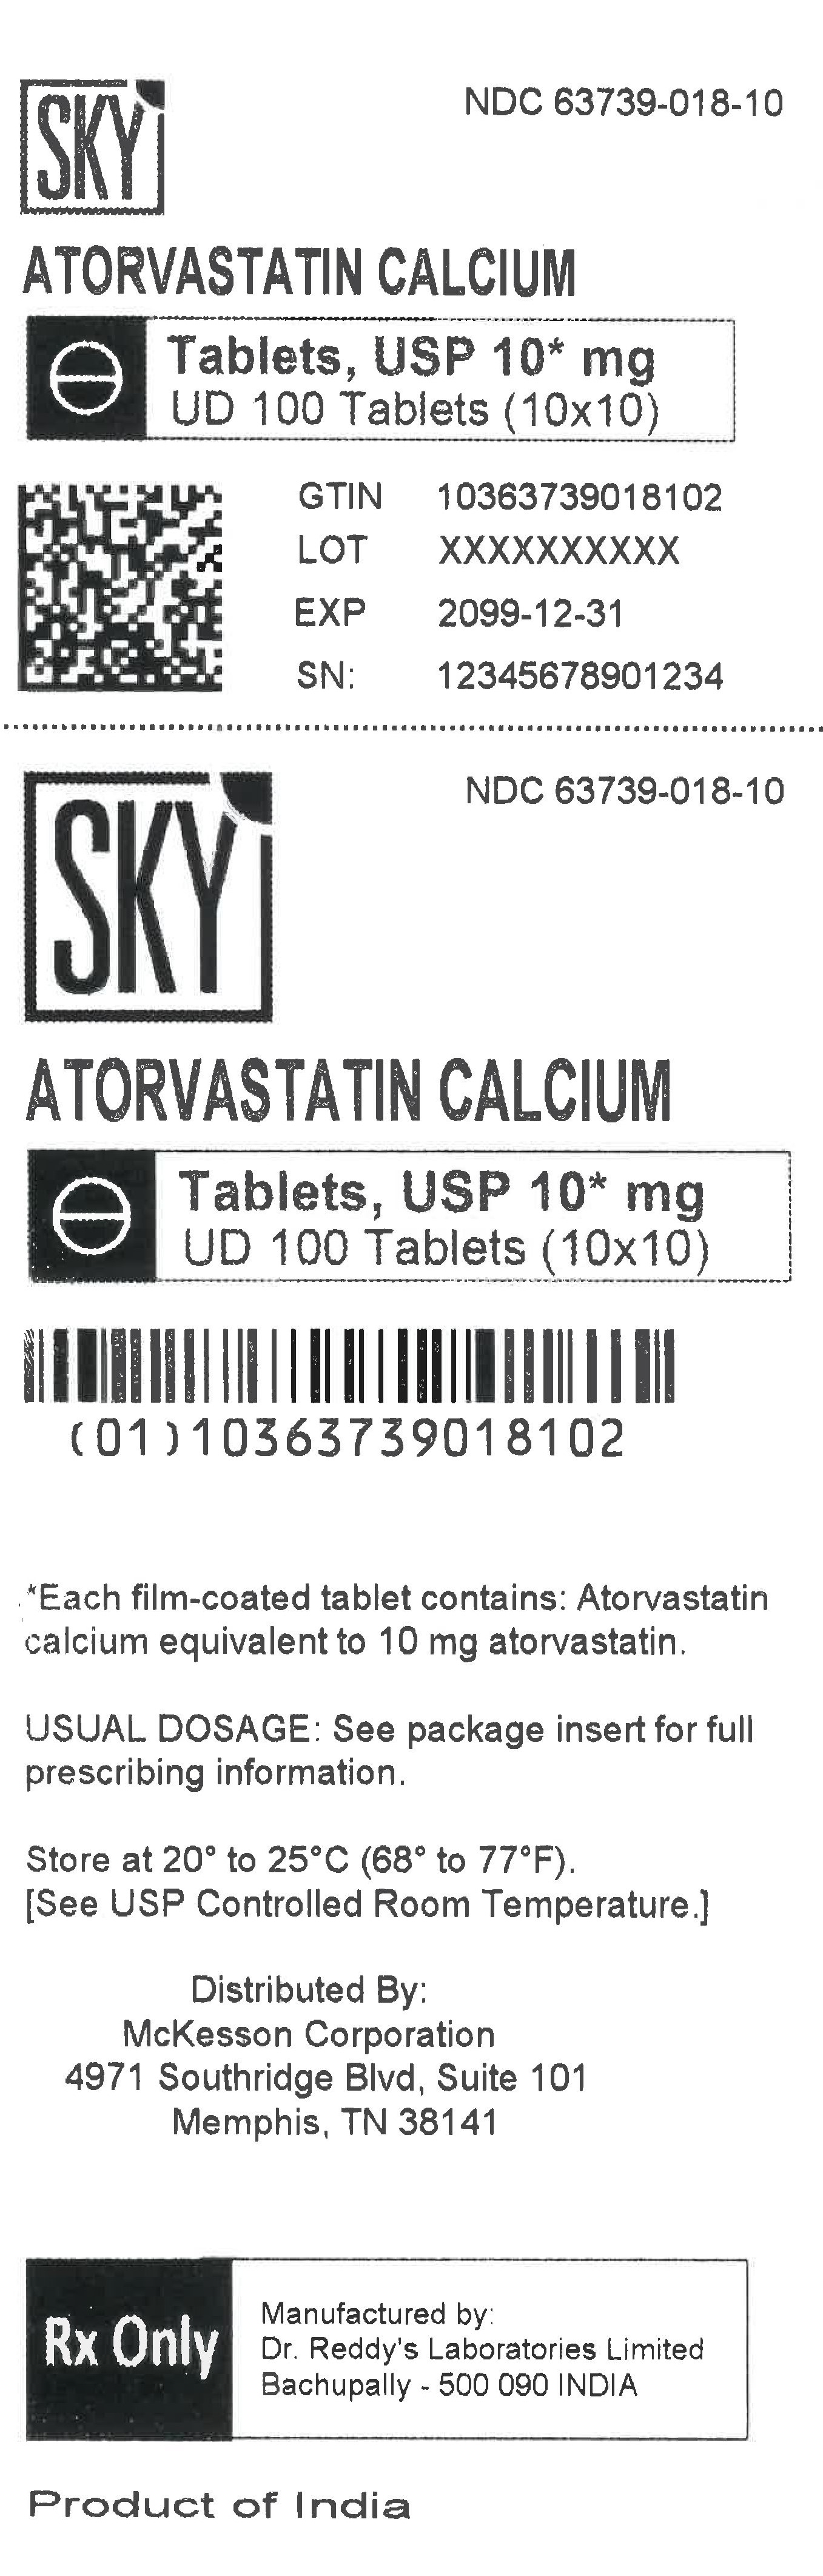 Atorvastatin Calcium Tablets USP 10 mg